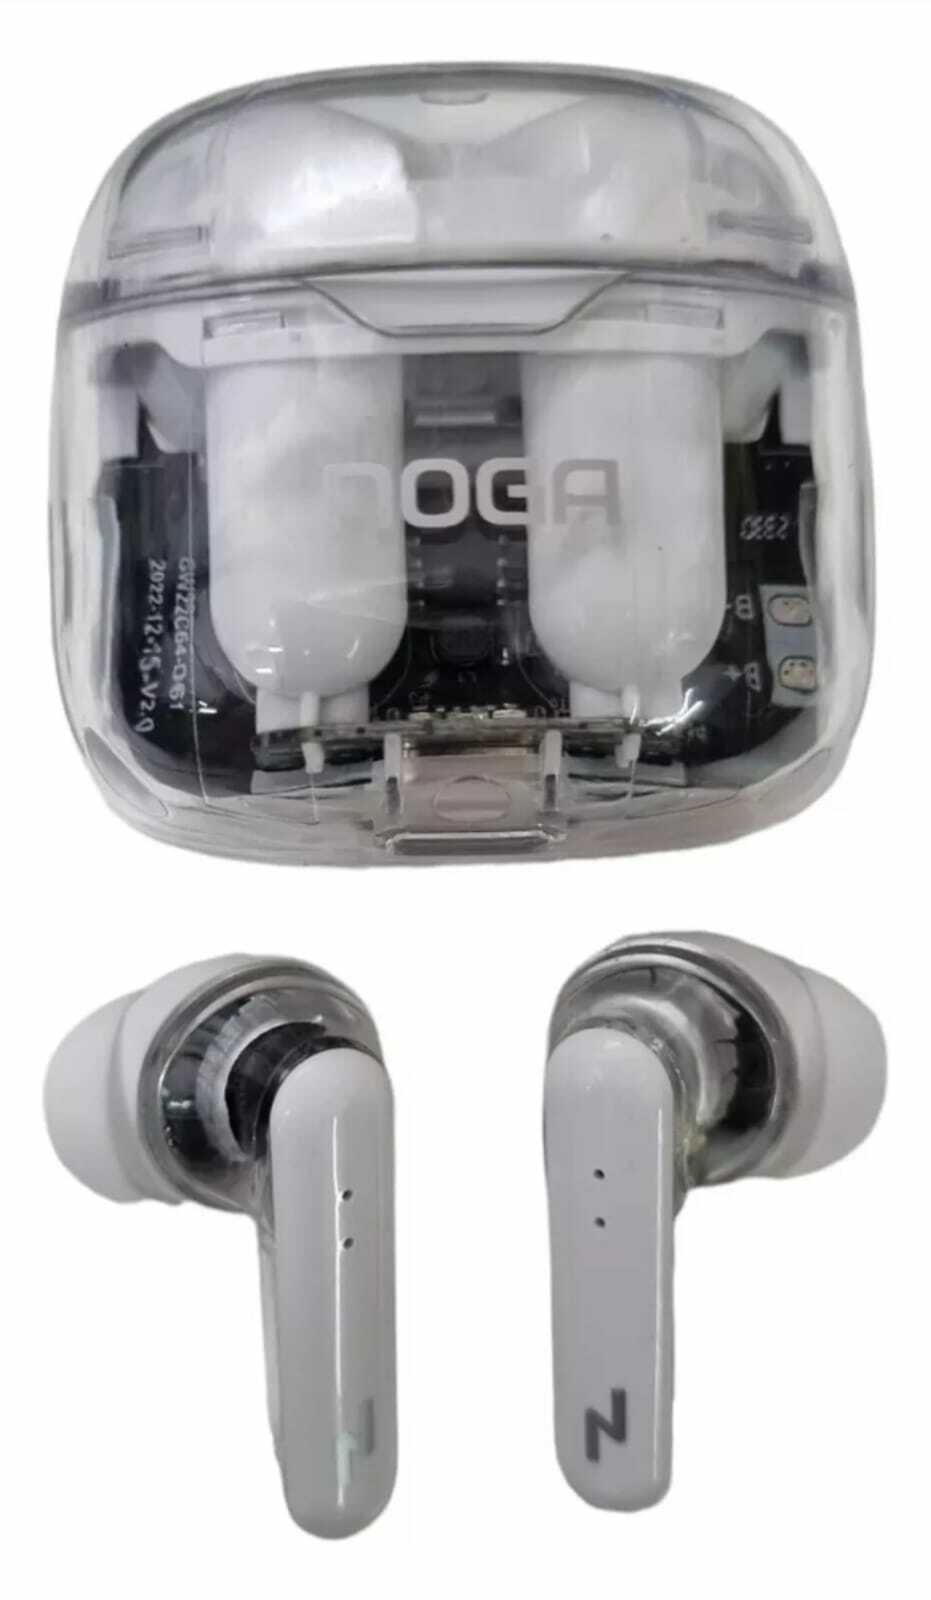 Auriculares Inalambricos Bluetooth Correr Noga Bt300 Celular